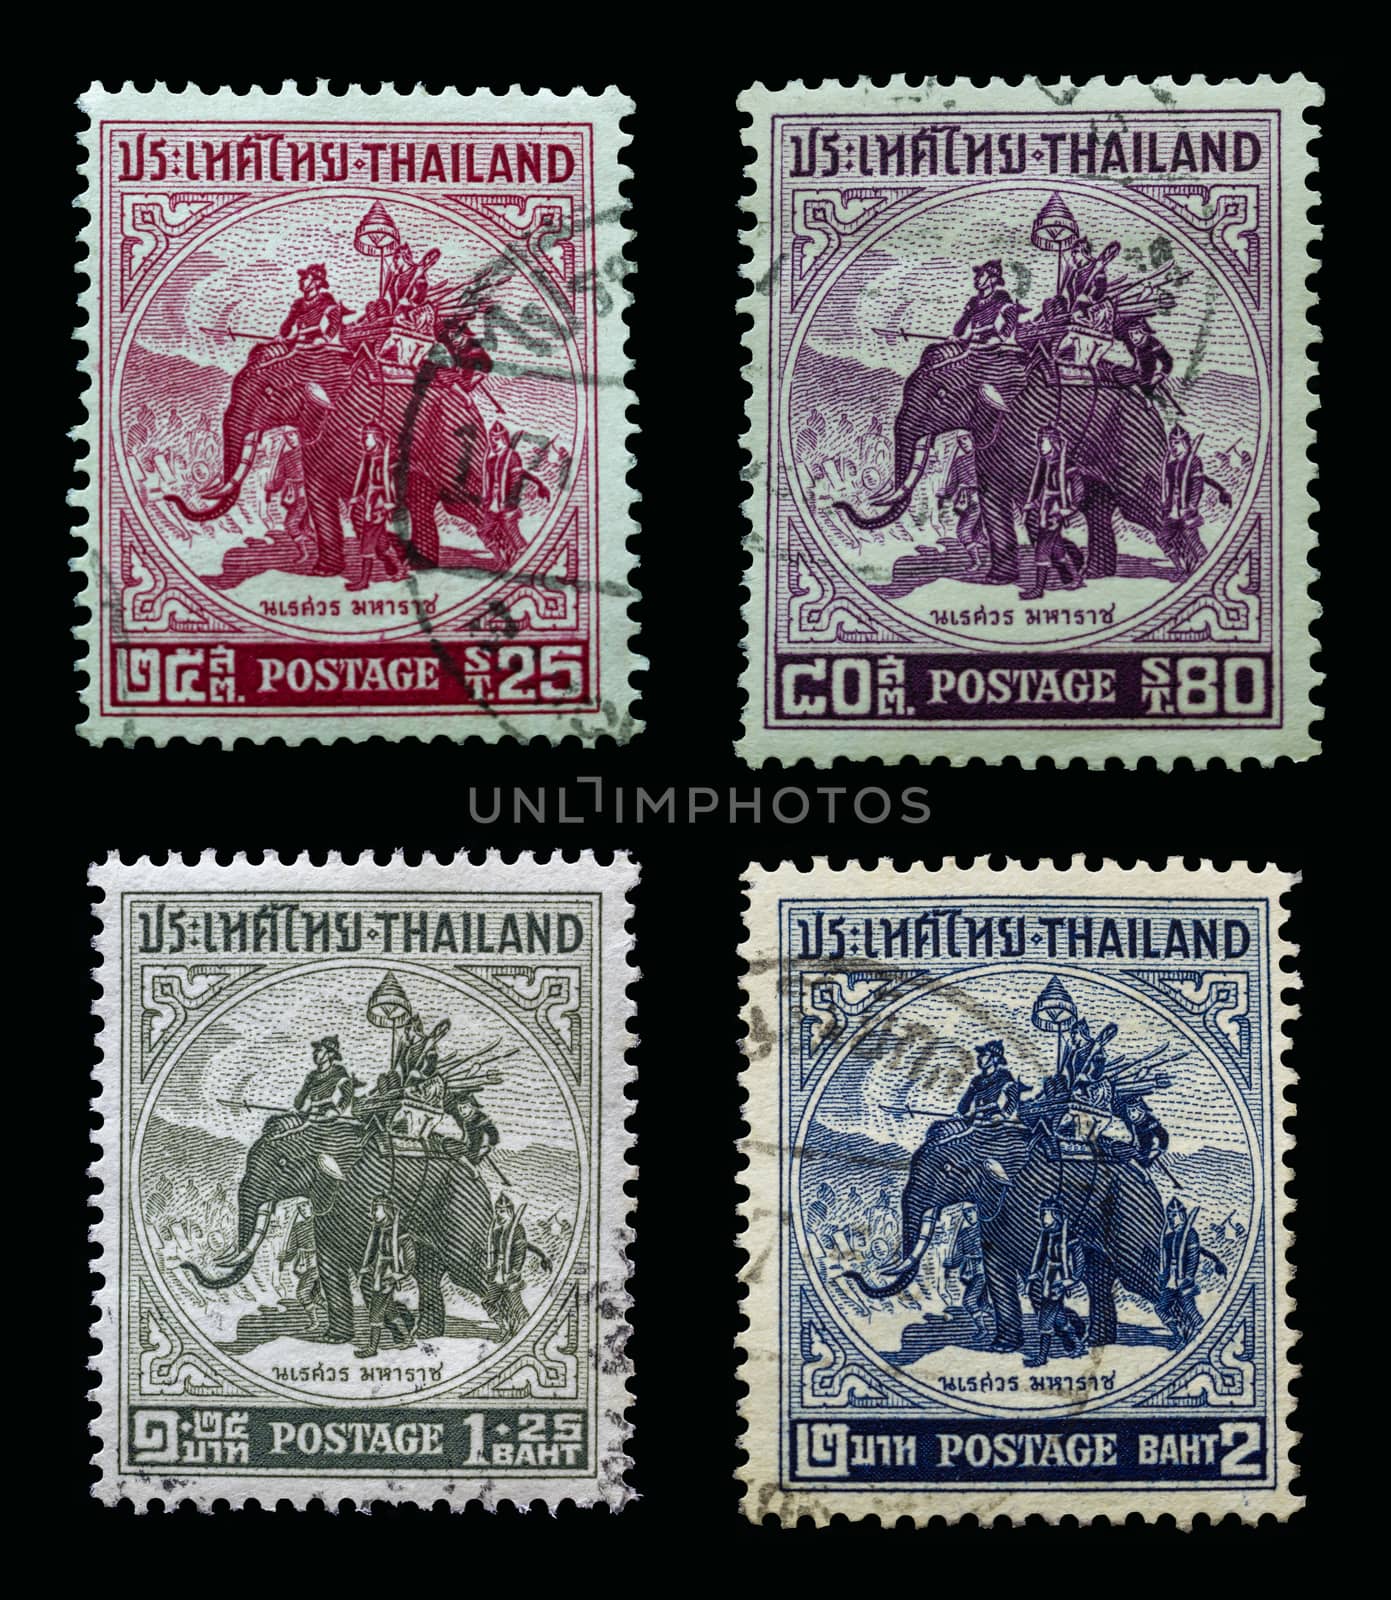 THAILAND - CIRCA 1955: set of Old Stamp Features Thai King Nares by rakoptonLPN